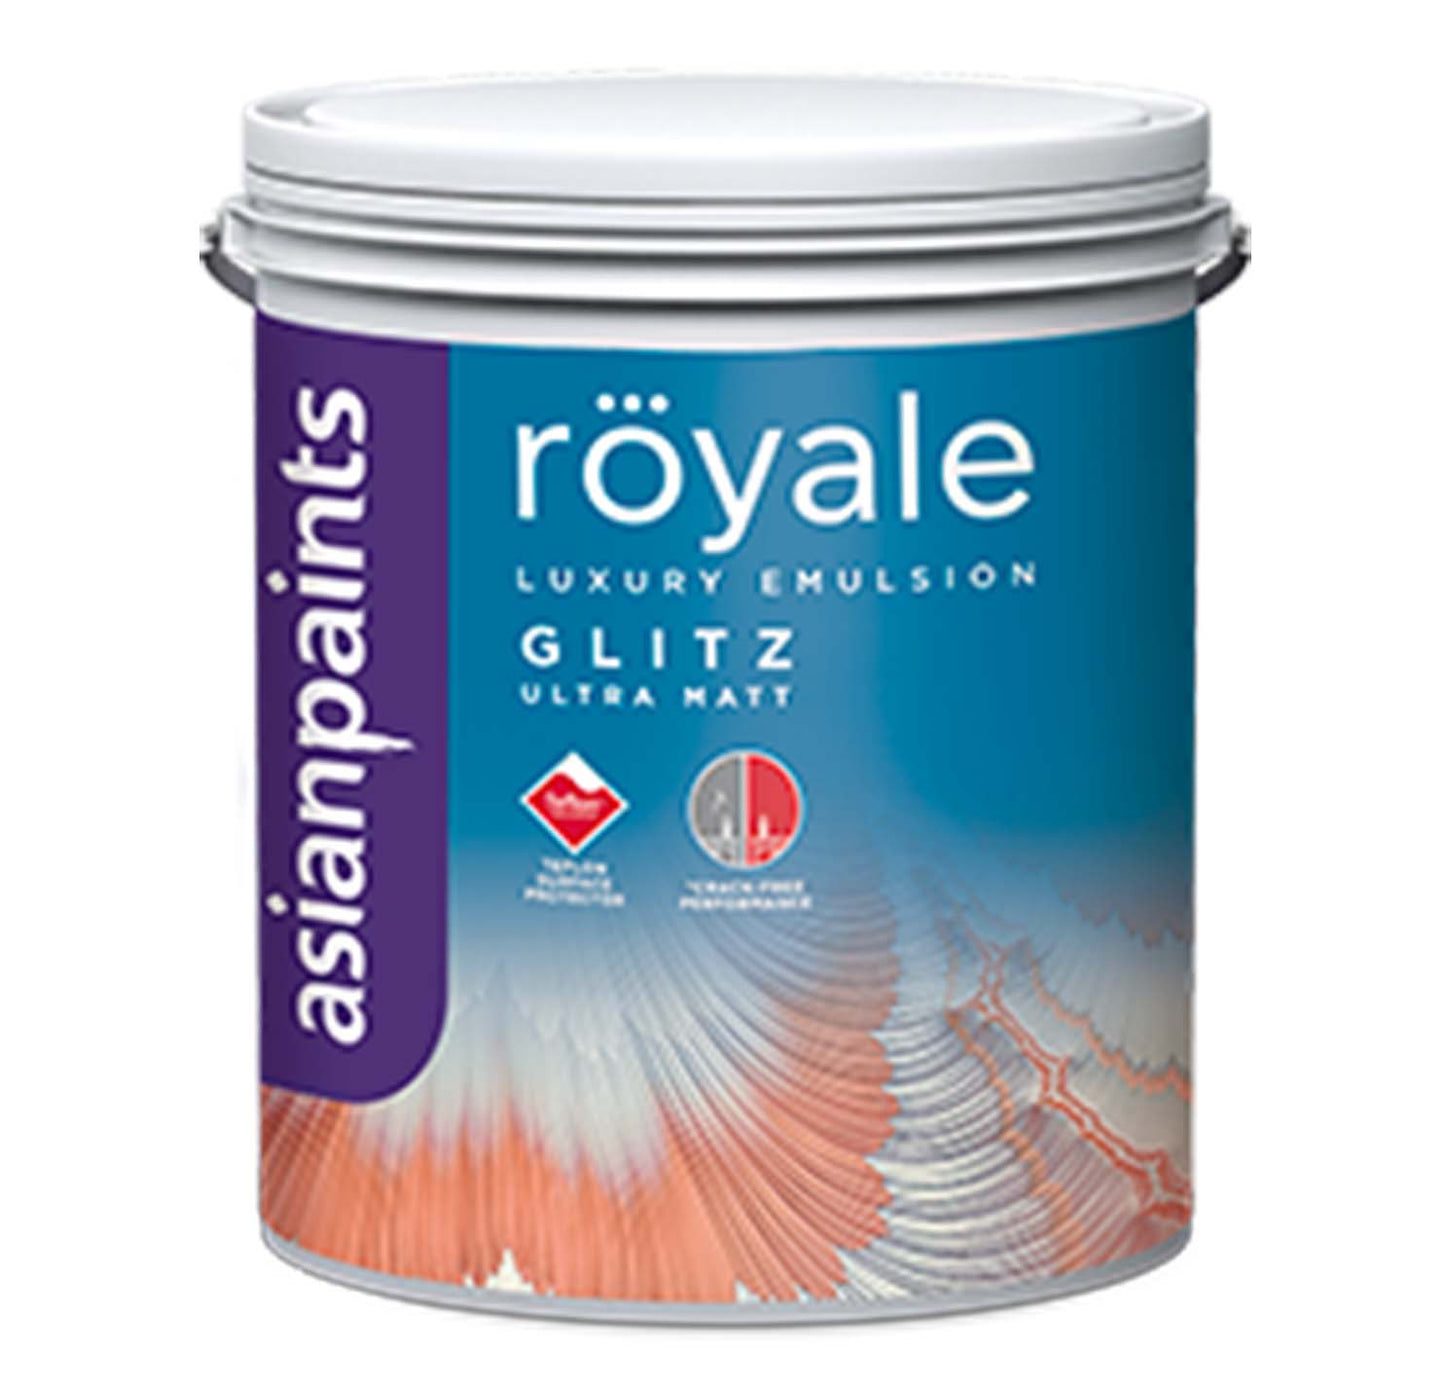 Asian Paints Royale Ultra Matt Glitz Luxury Emulsion Interior Wall Paint - White